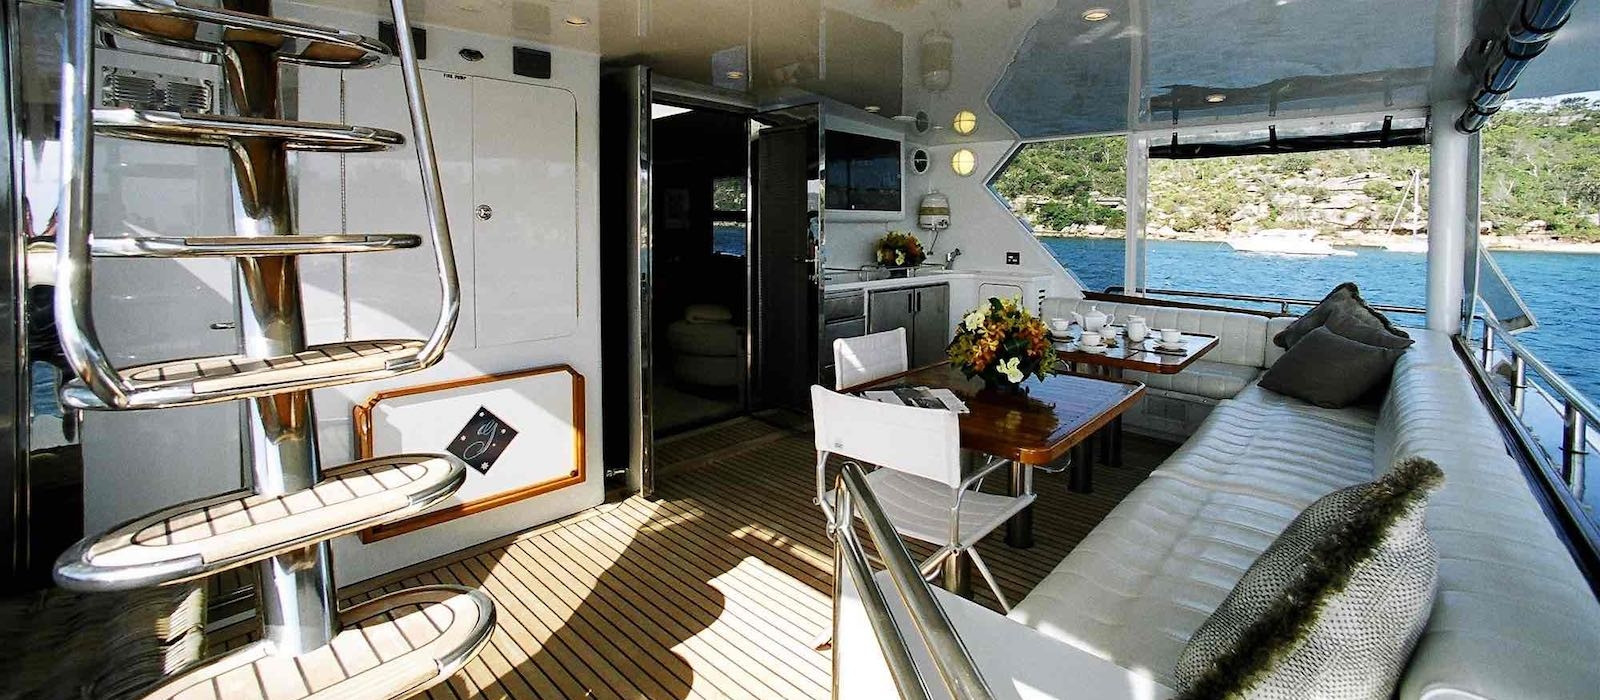 Aft deck lounge and dining on Galaxy I luxury boat hire Whitsundays